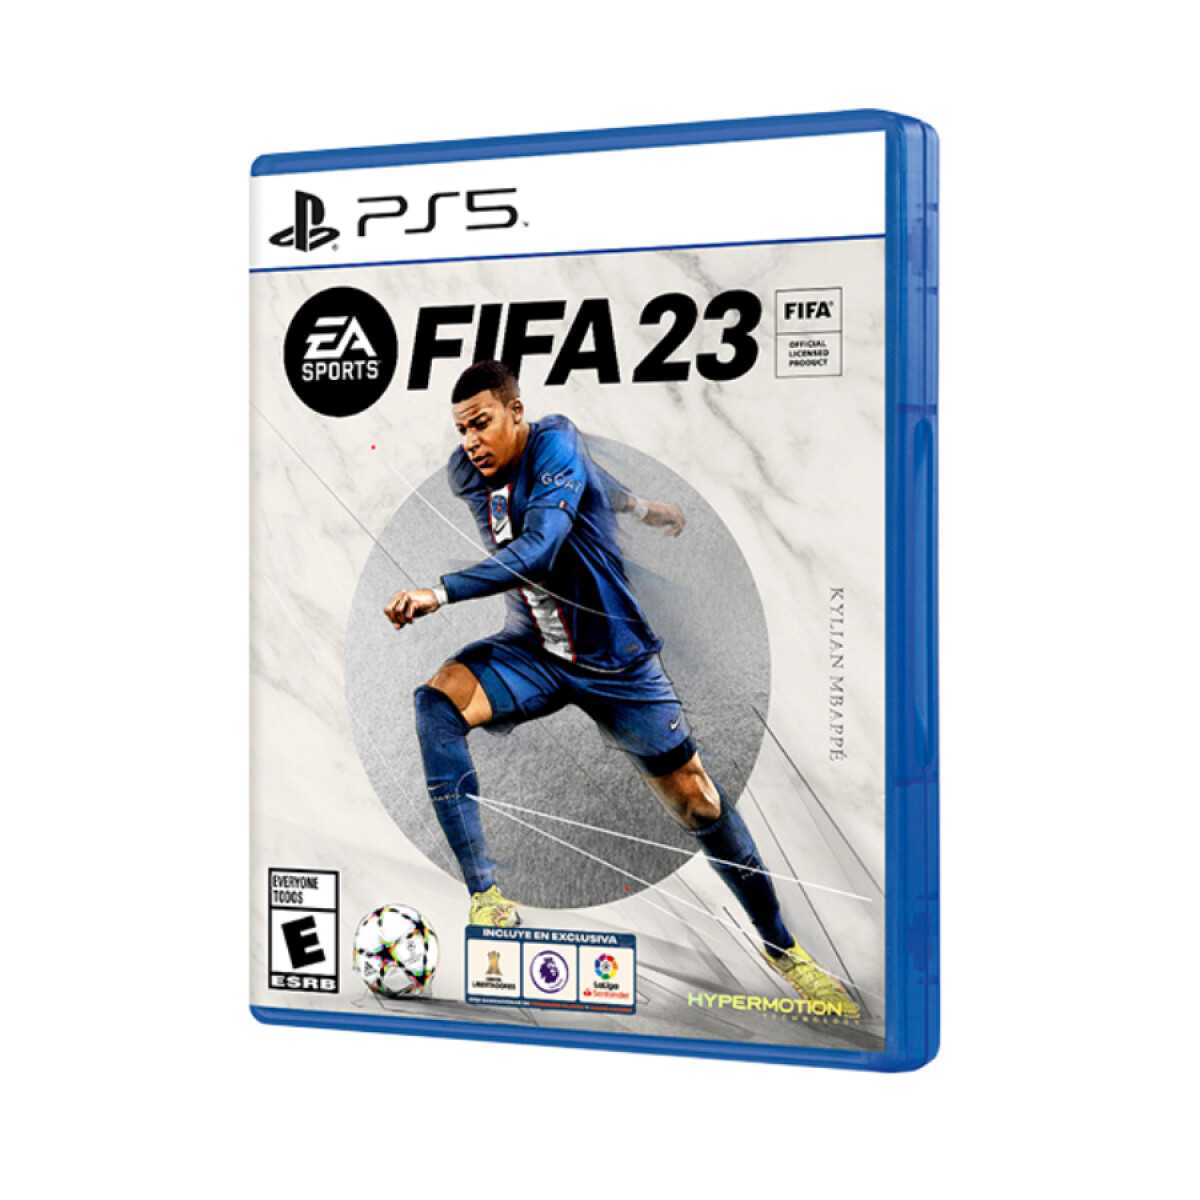 FIFA 23 PS5 